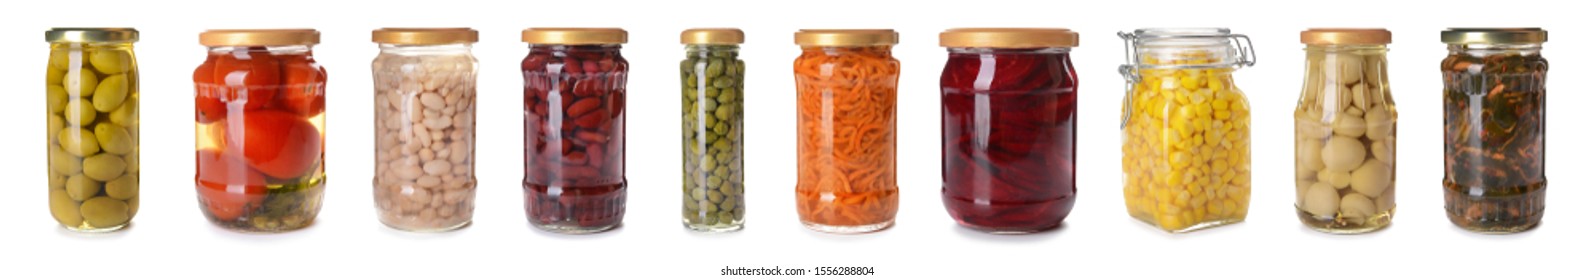 Download Olive Jar Images Stock Photos Vectors Shutterstock Yellowimages Mockups